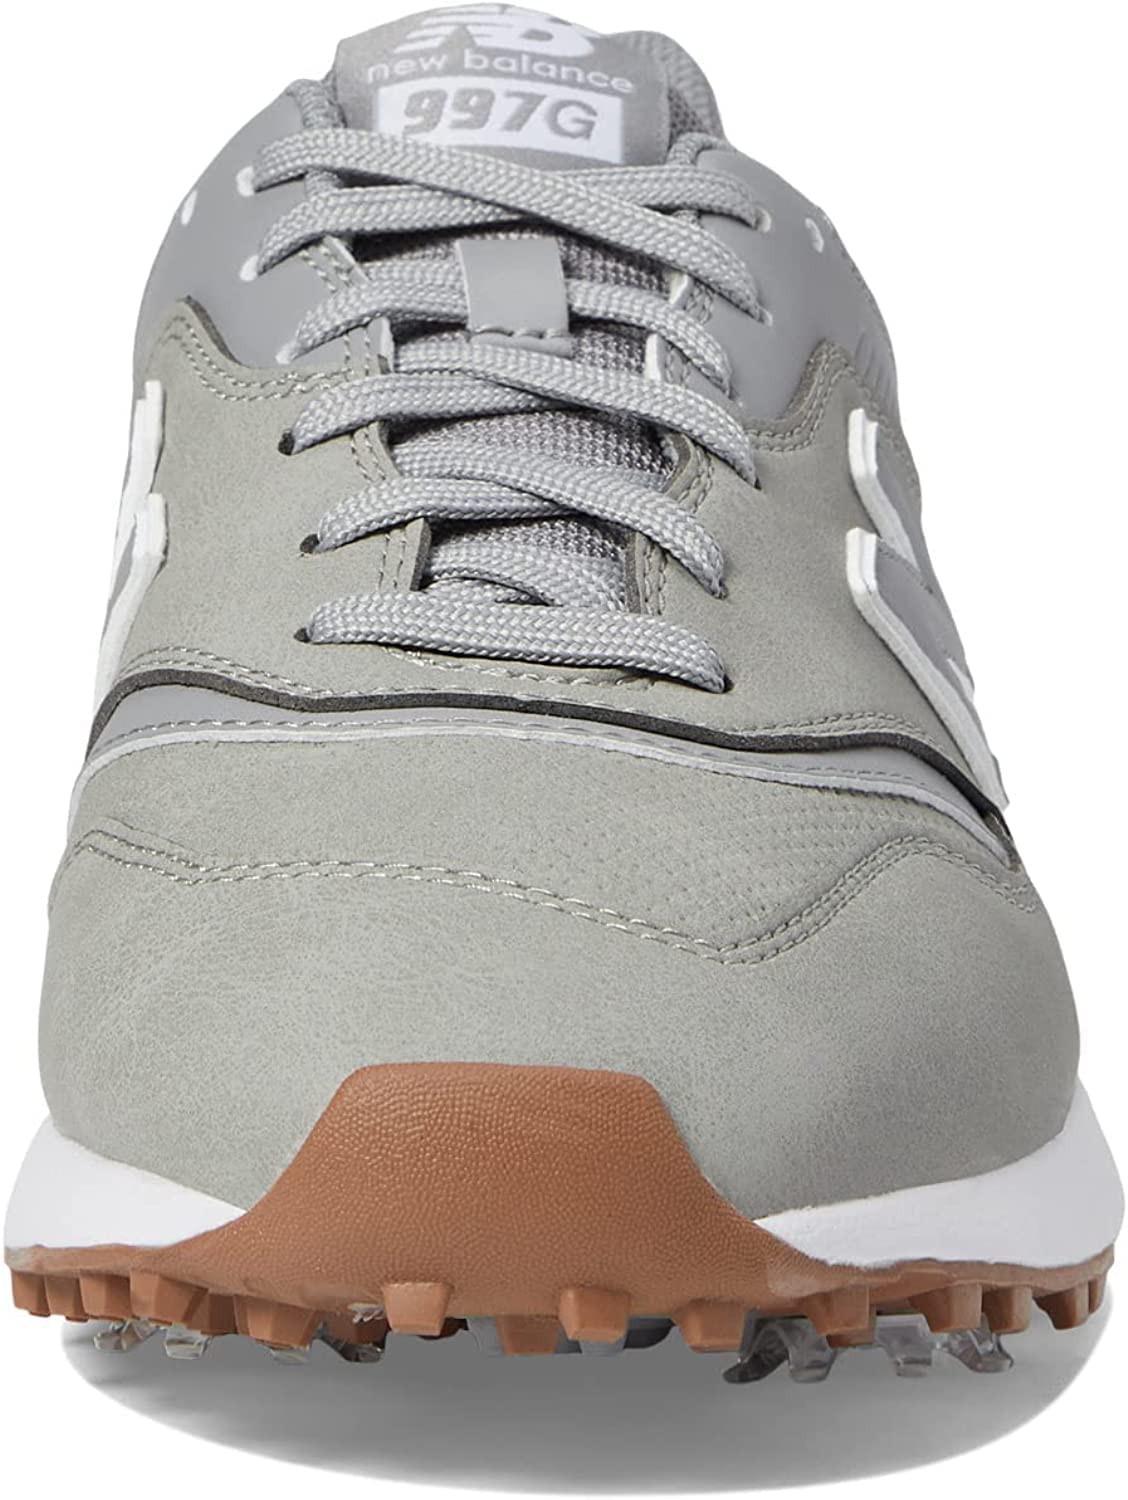 New Balance Men's 997 Golf Shoe